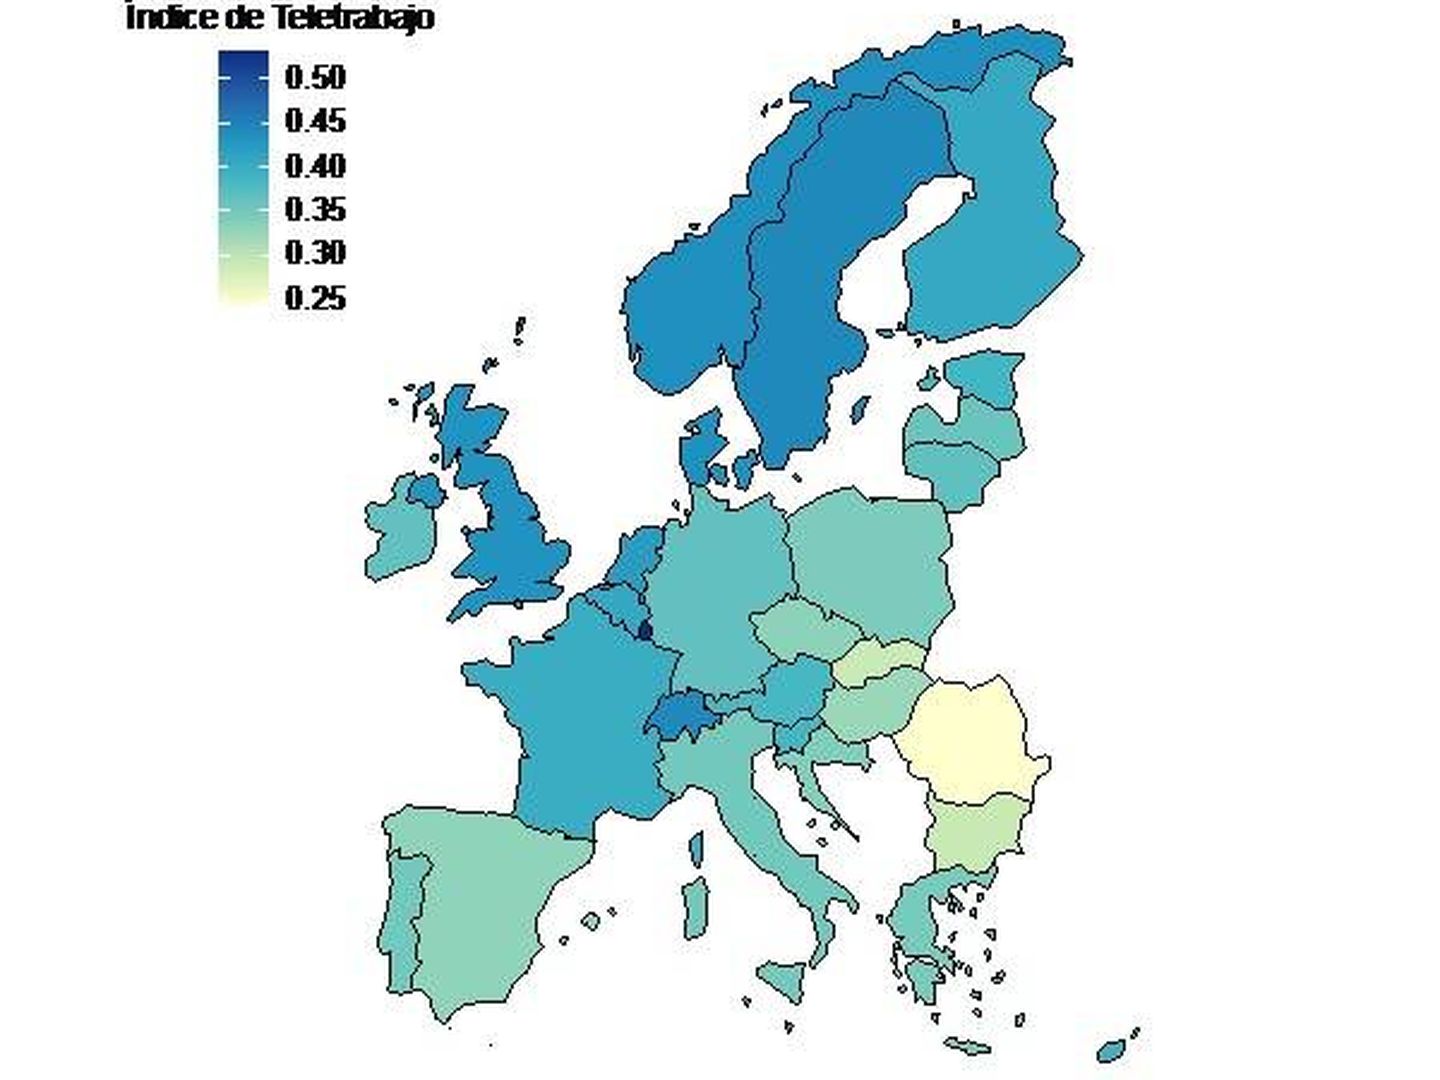 Índice de teletrabajo por países en Europa.